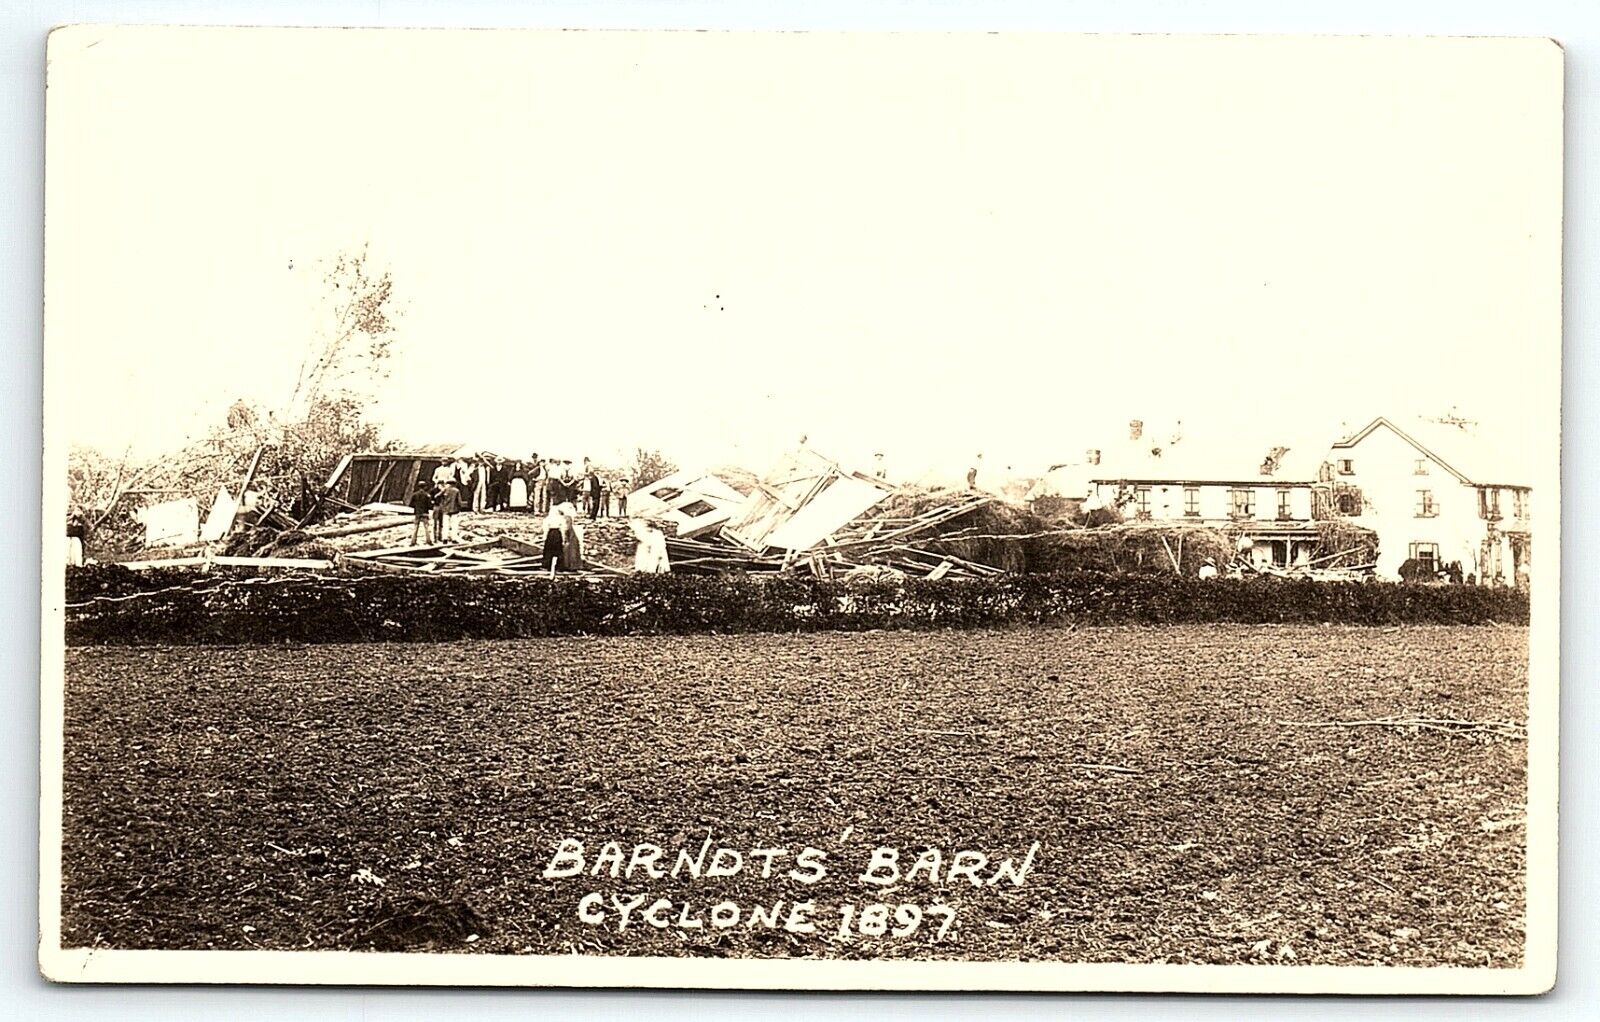 c1908 TELFORD PA BARNDTS BARN CYCLONE OF 1897 DAMAGE PHOTO RPPC POSTCARD P3884